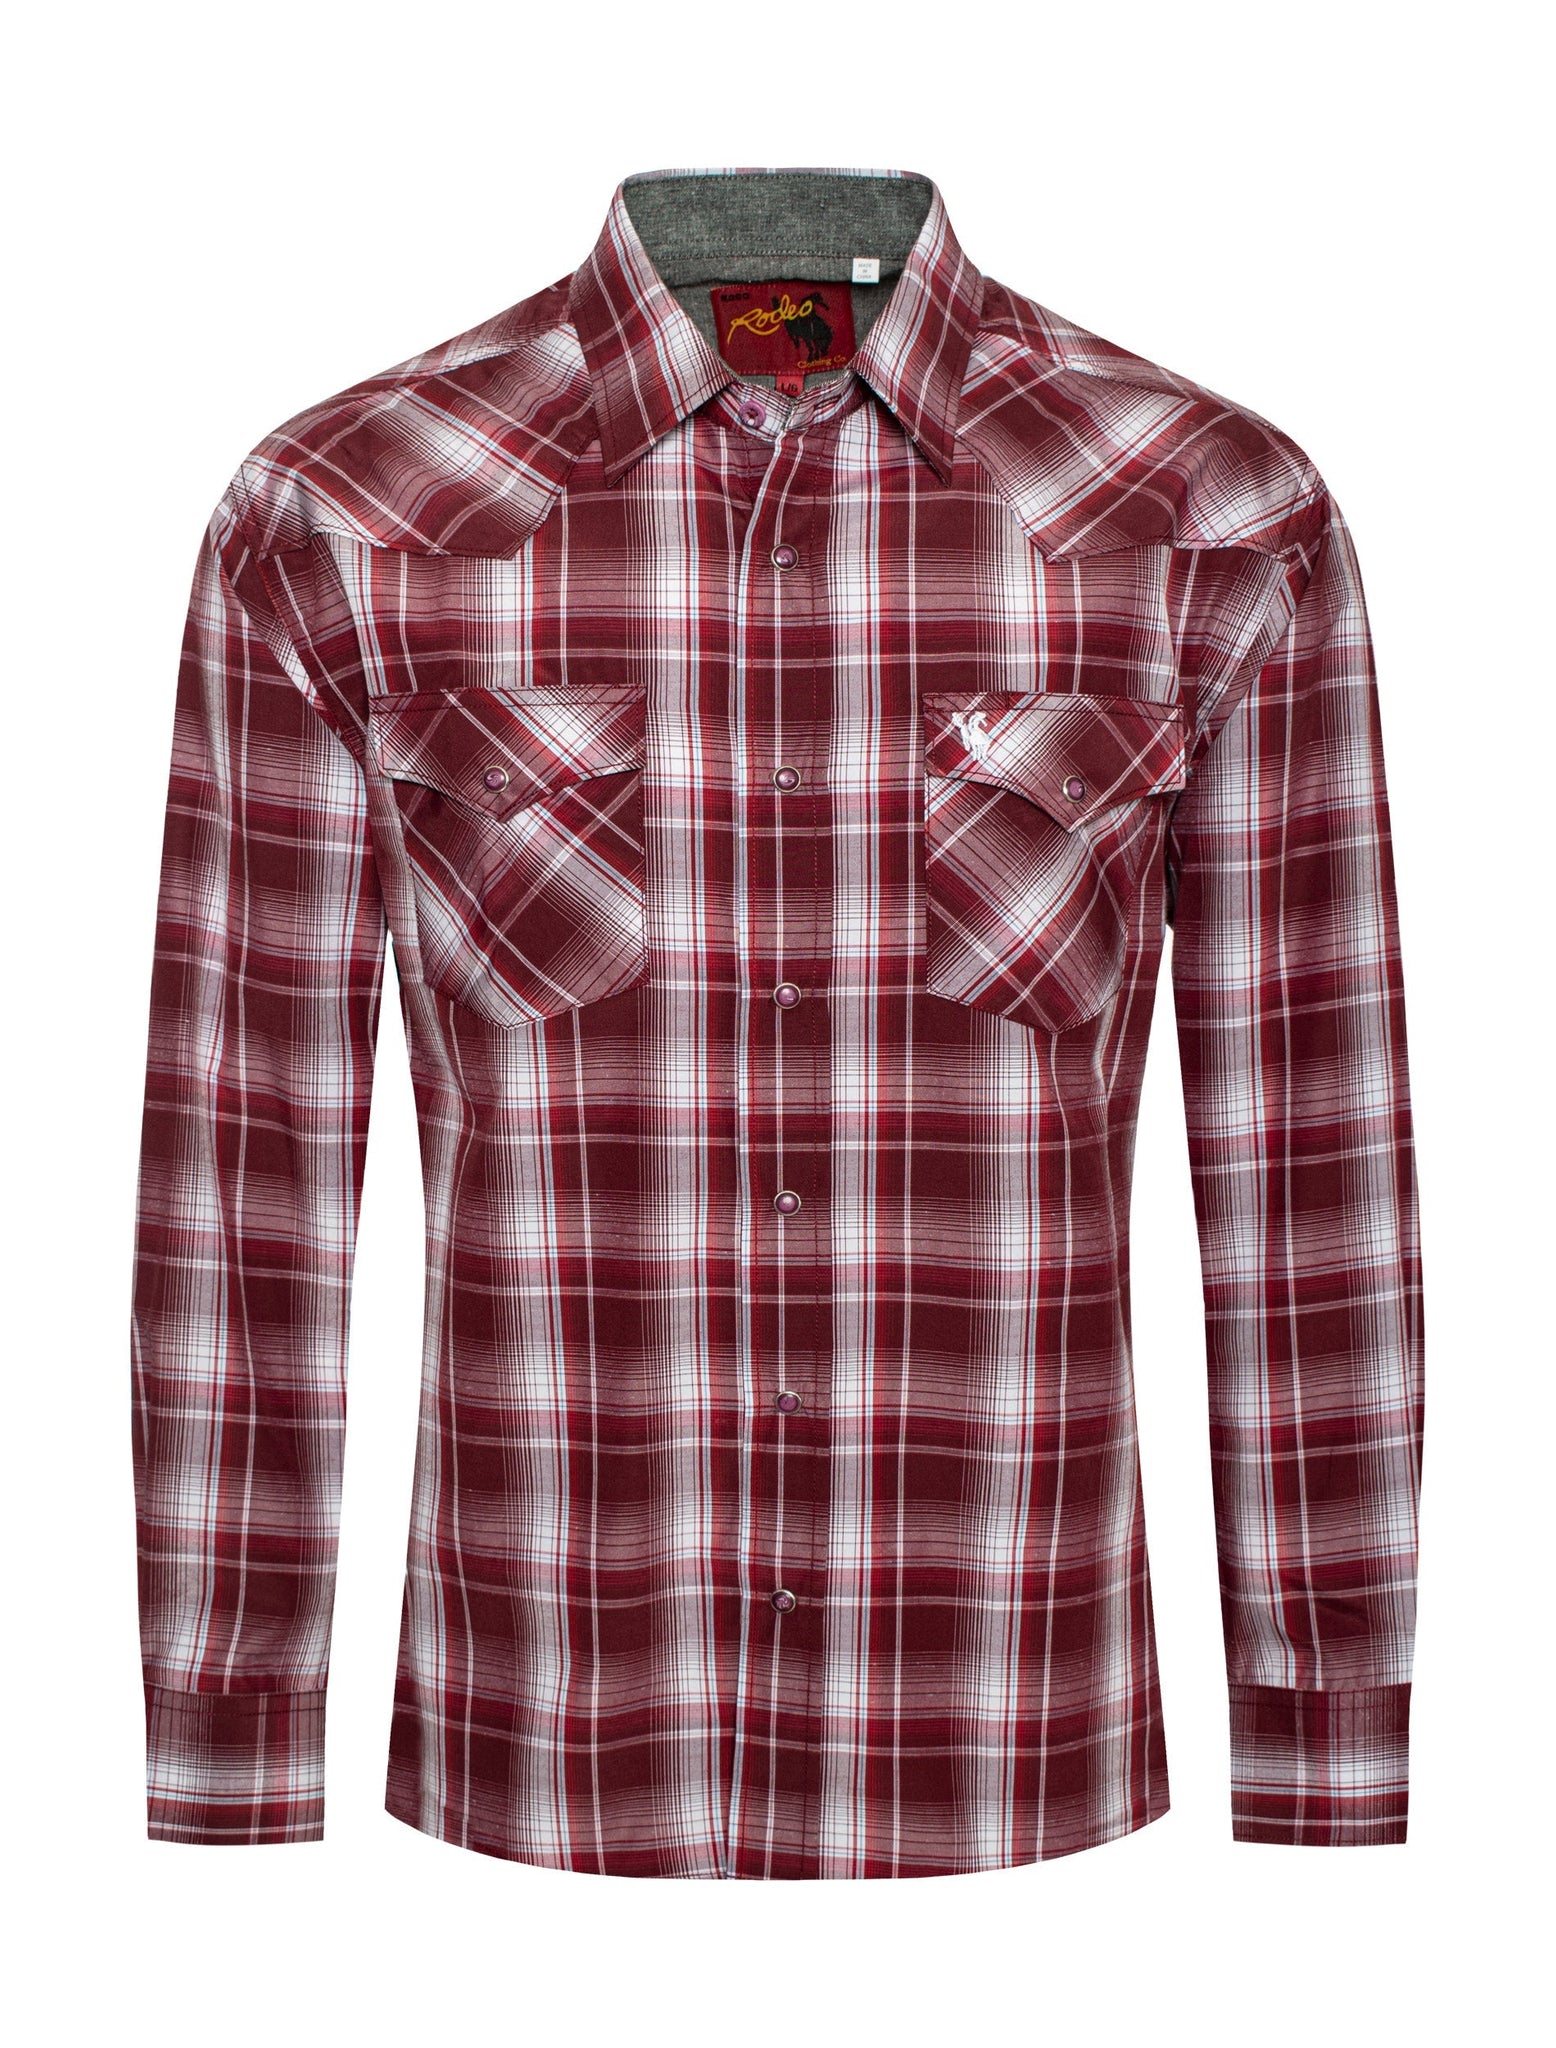 Men's Western Long Sleeve Pearl Snap Plaid Shirt -PS400-421